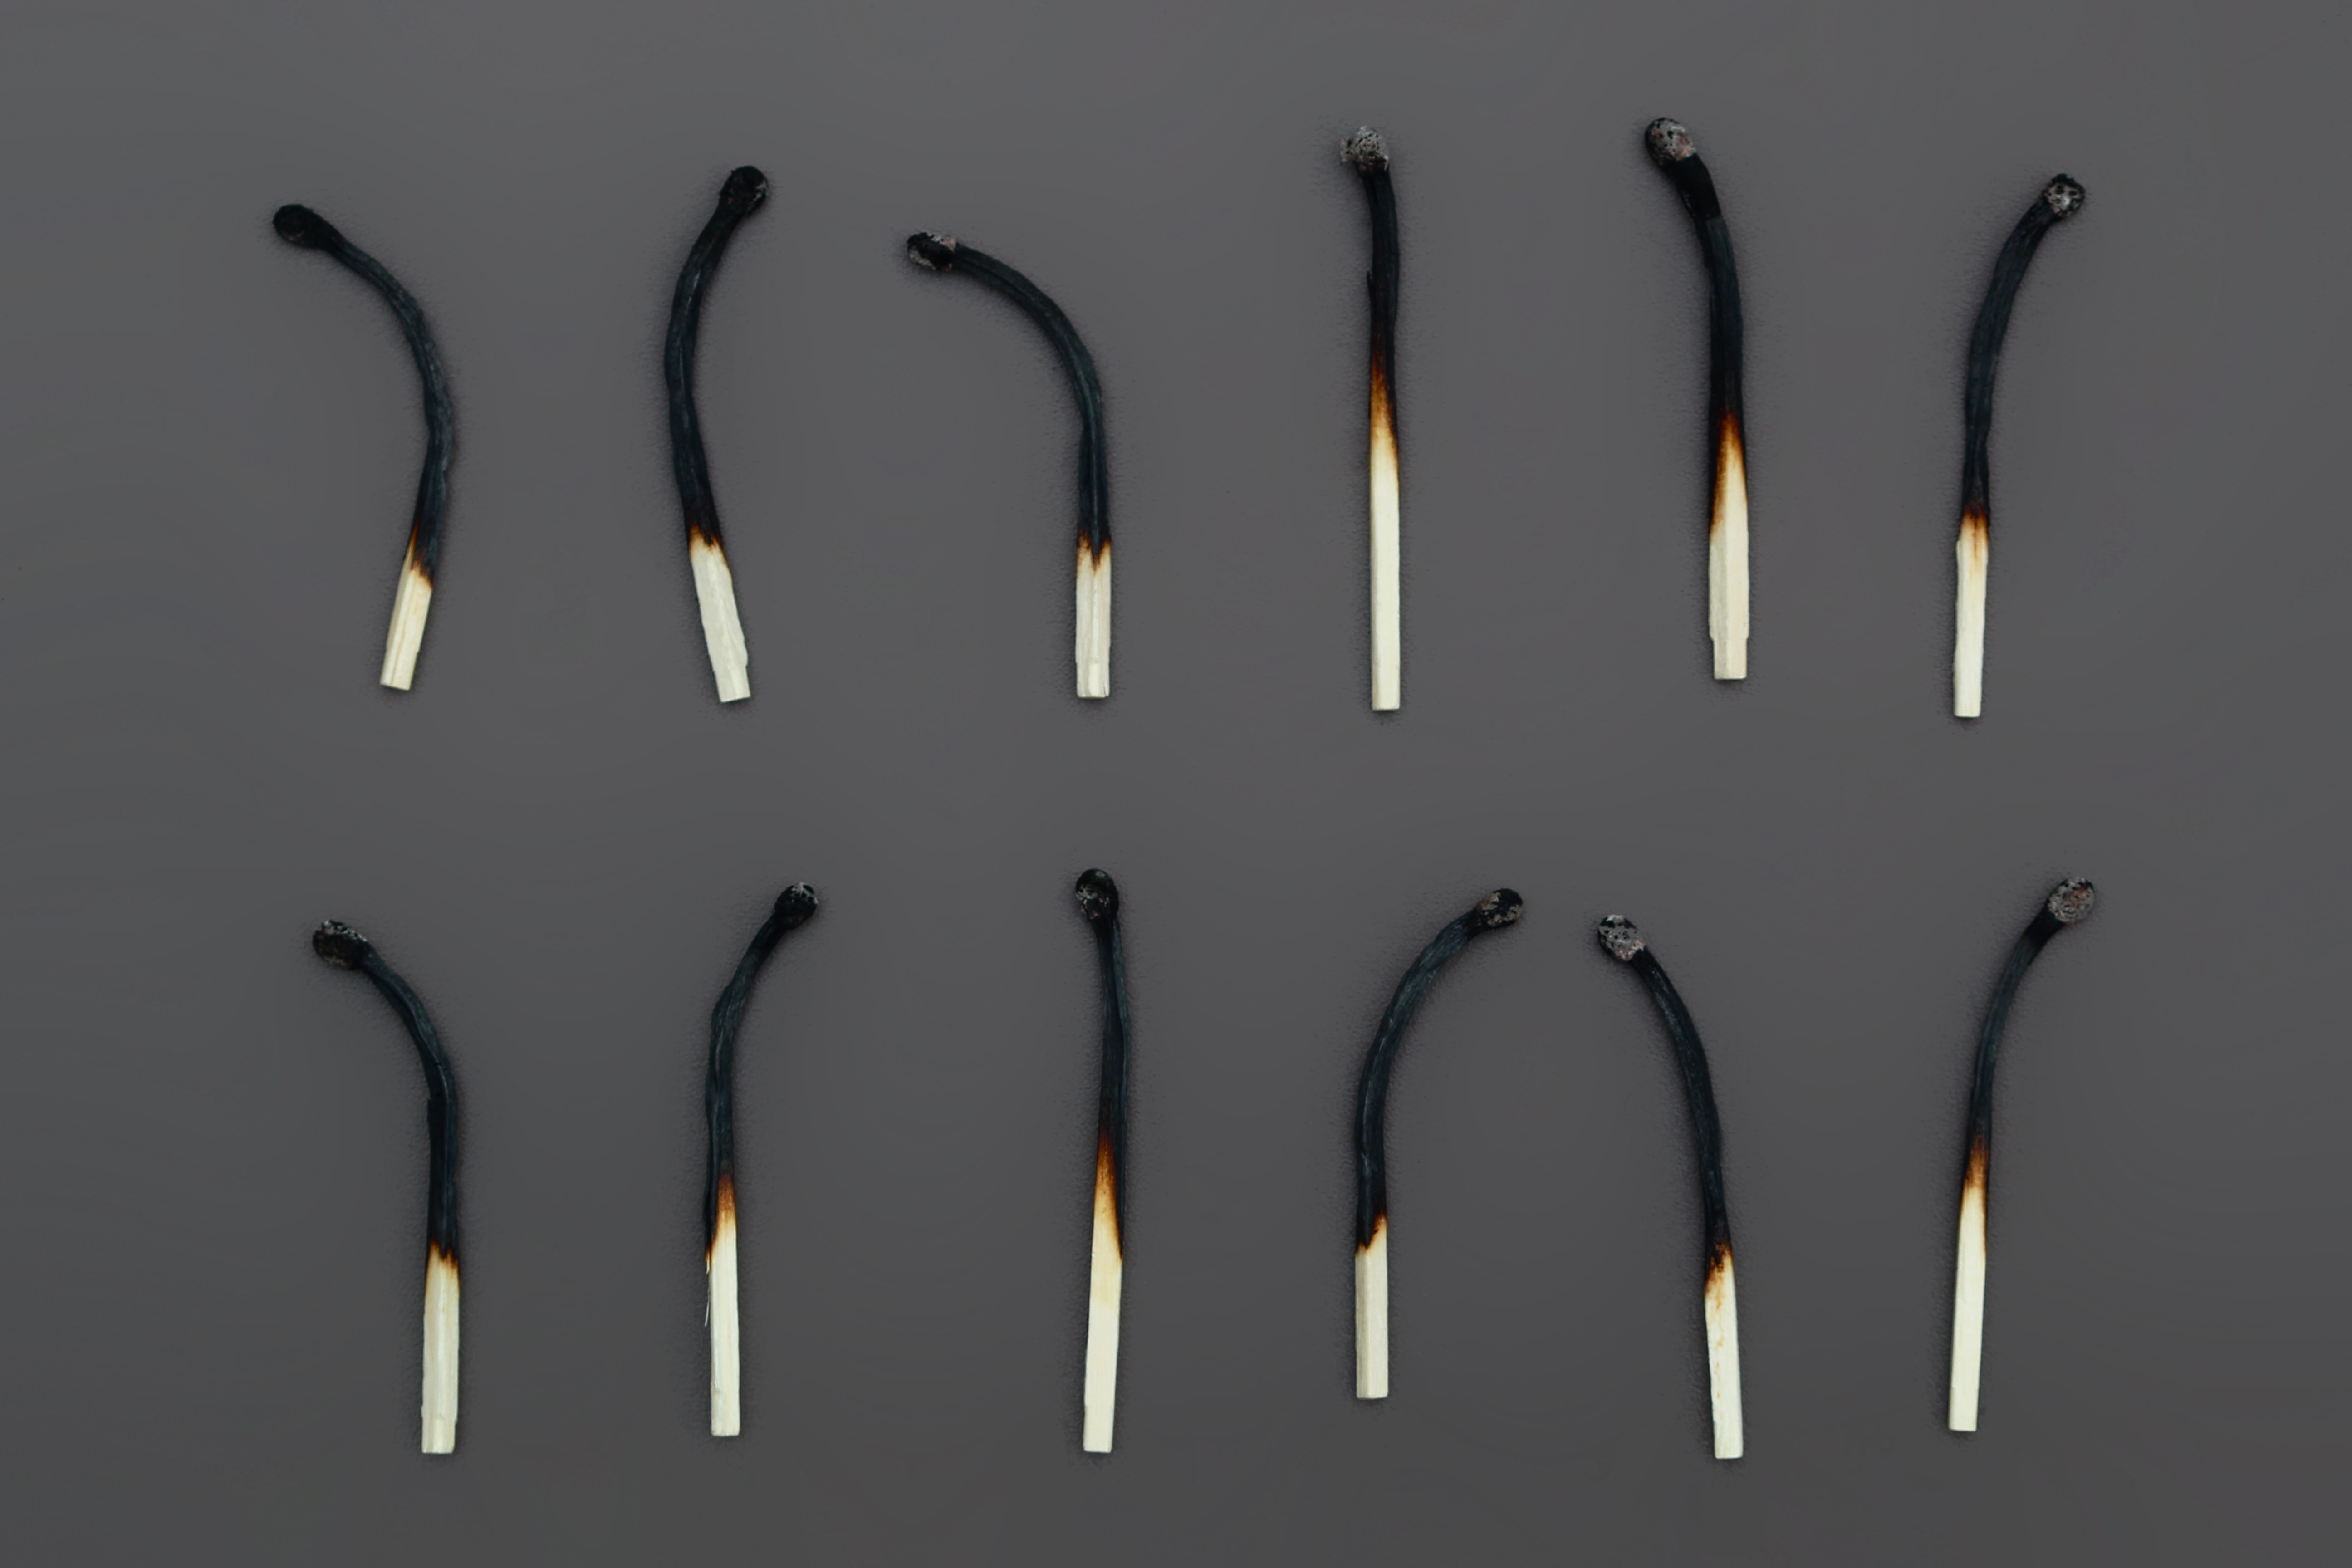 12 burnt matchsticks against a grey background